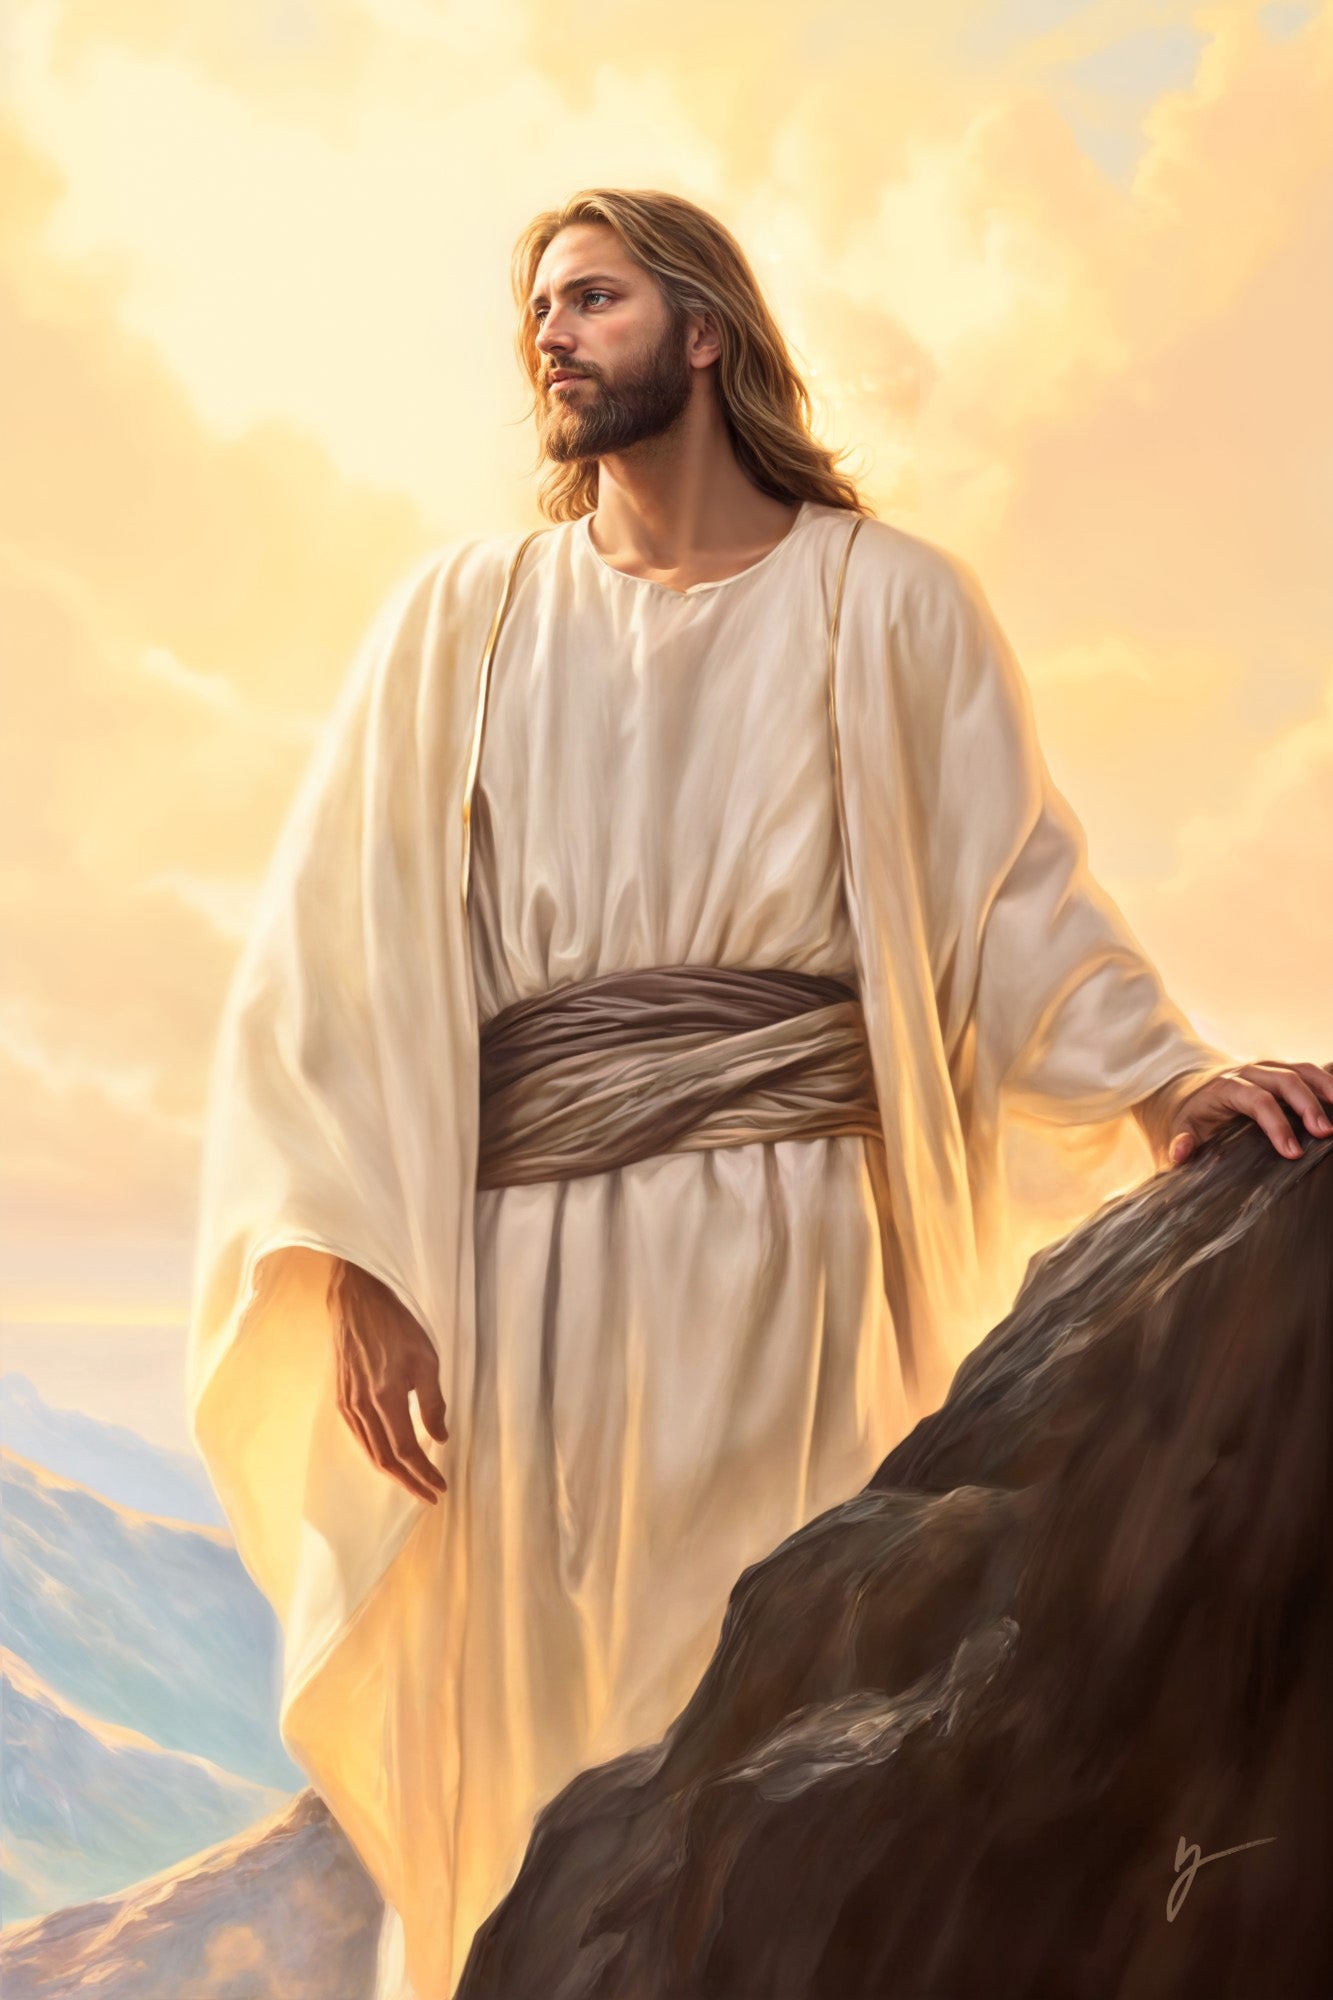 A portrait of Jesus Christ.